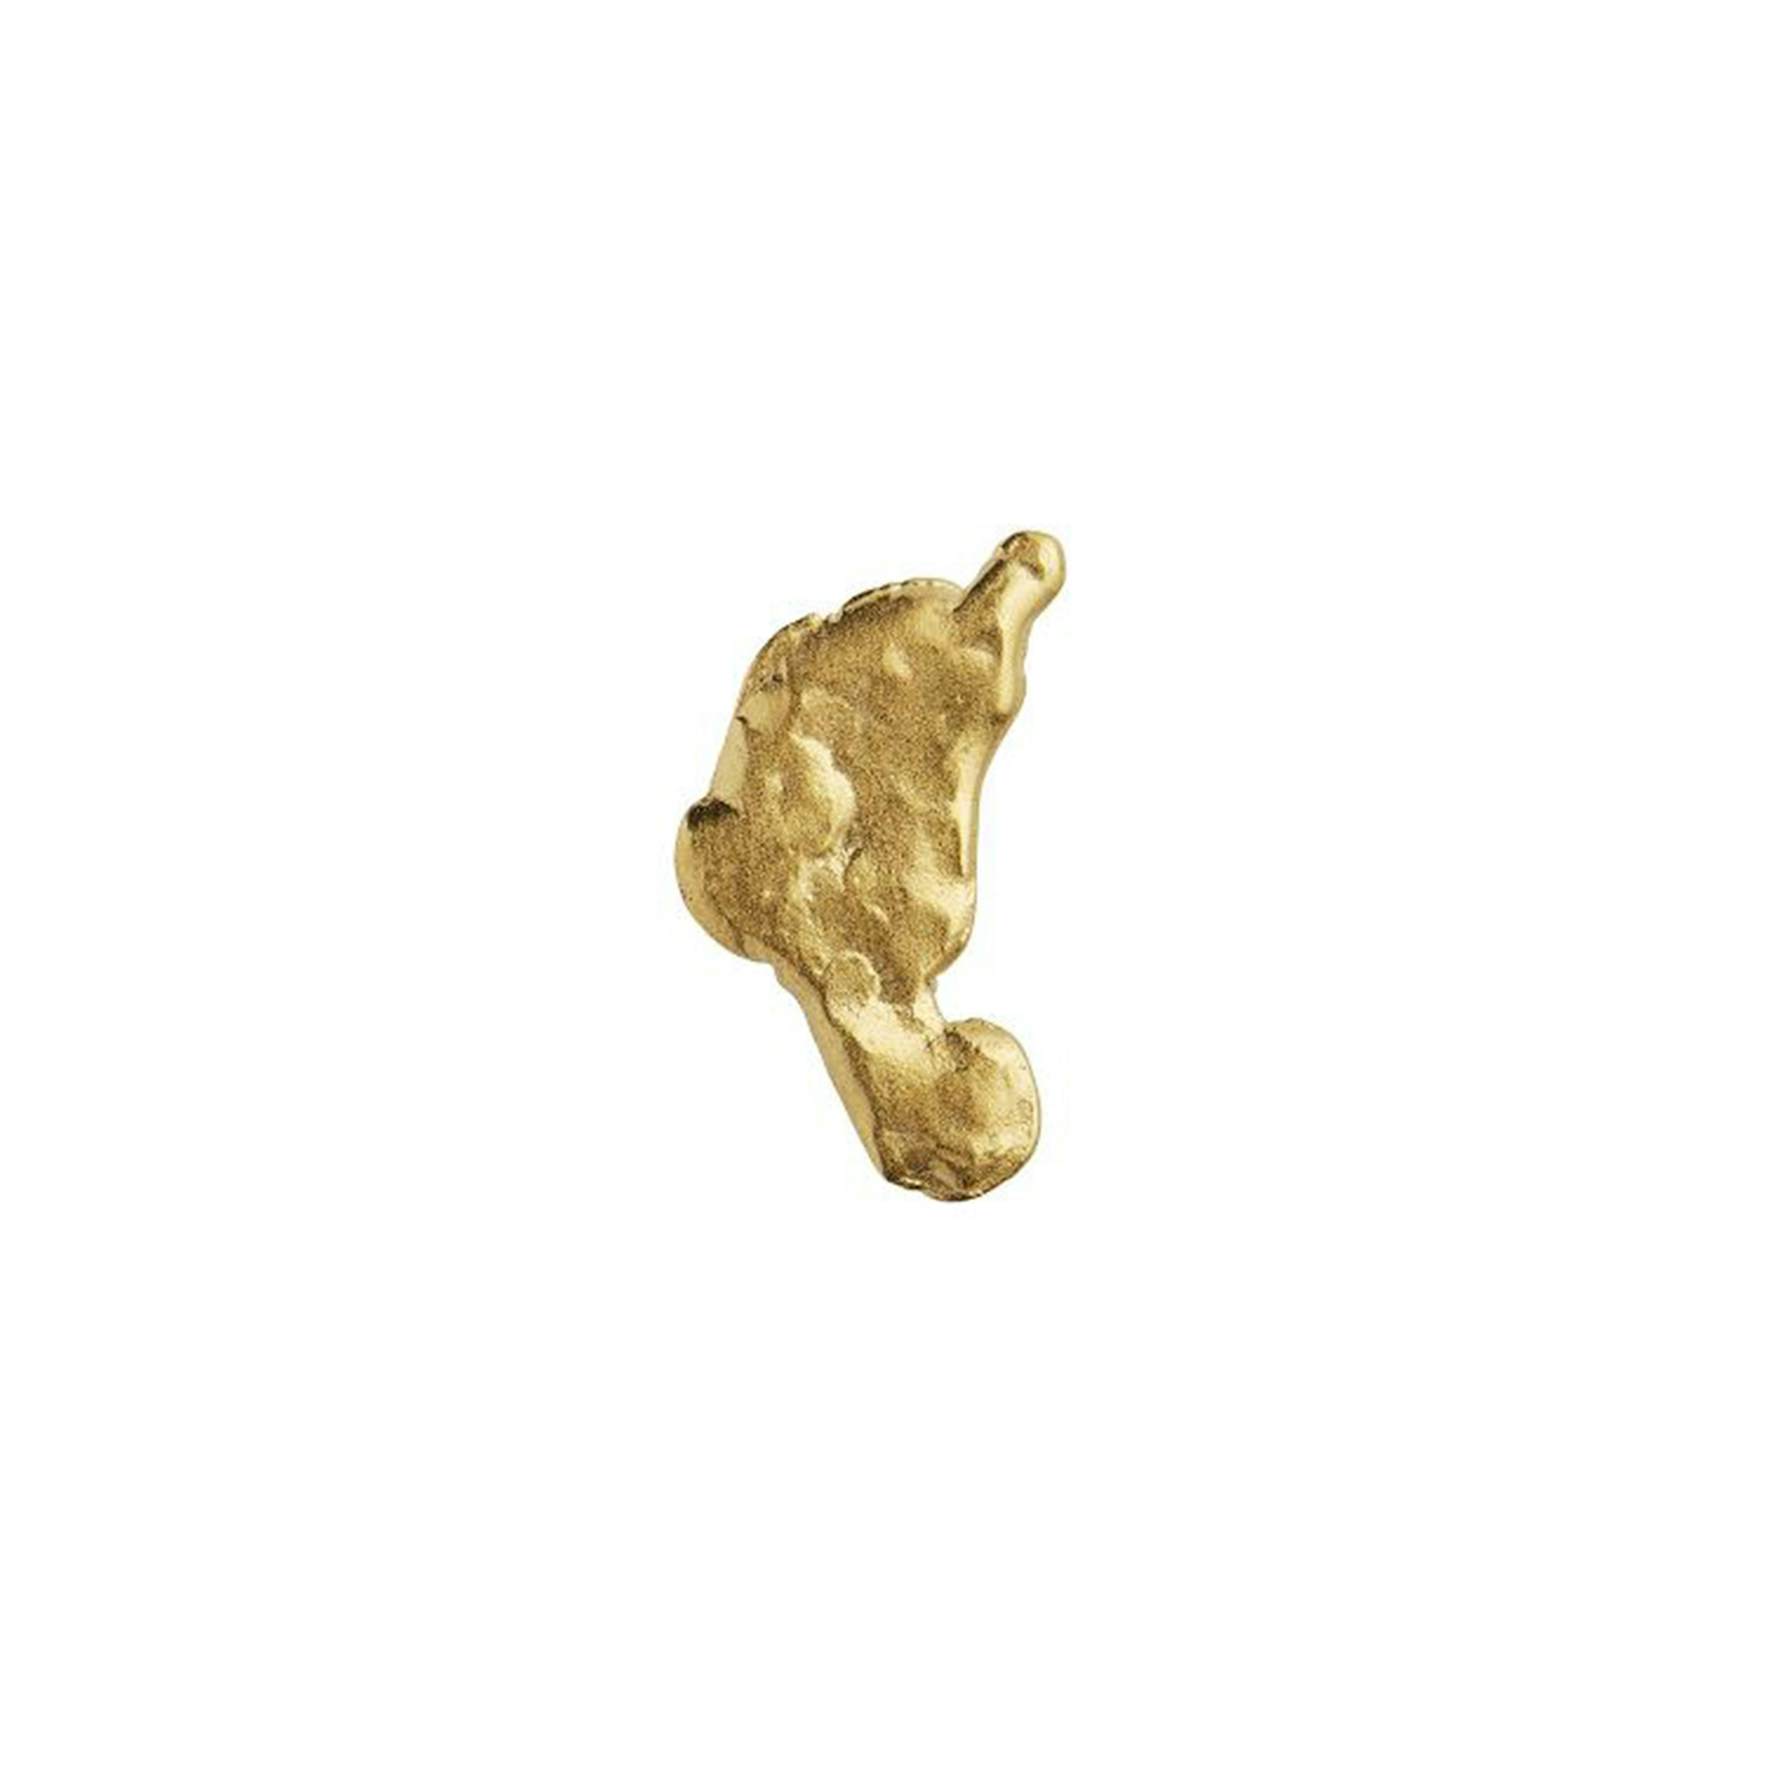 Gold Splash Earstick fra STINE A Jewelry i Forgyldt-Sølv Sterling 925